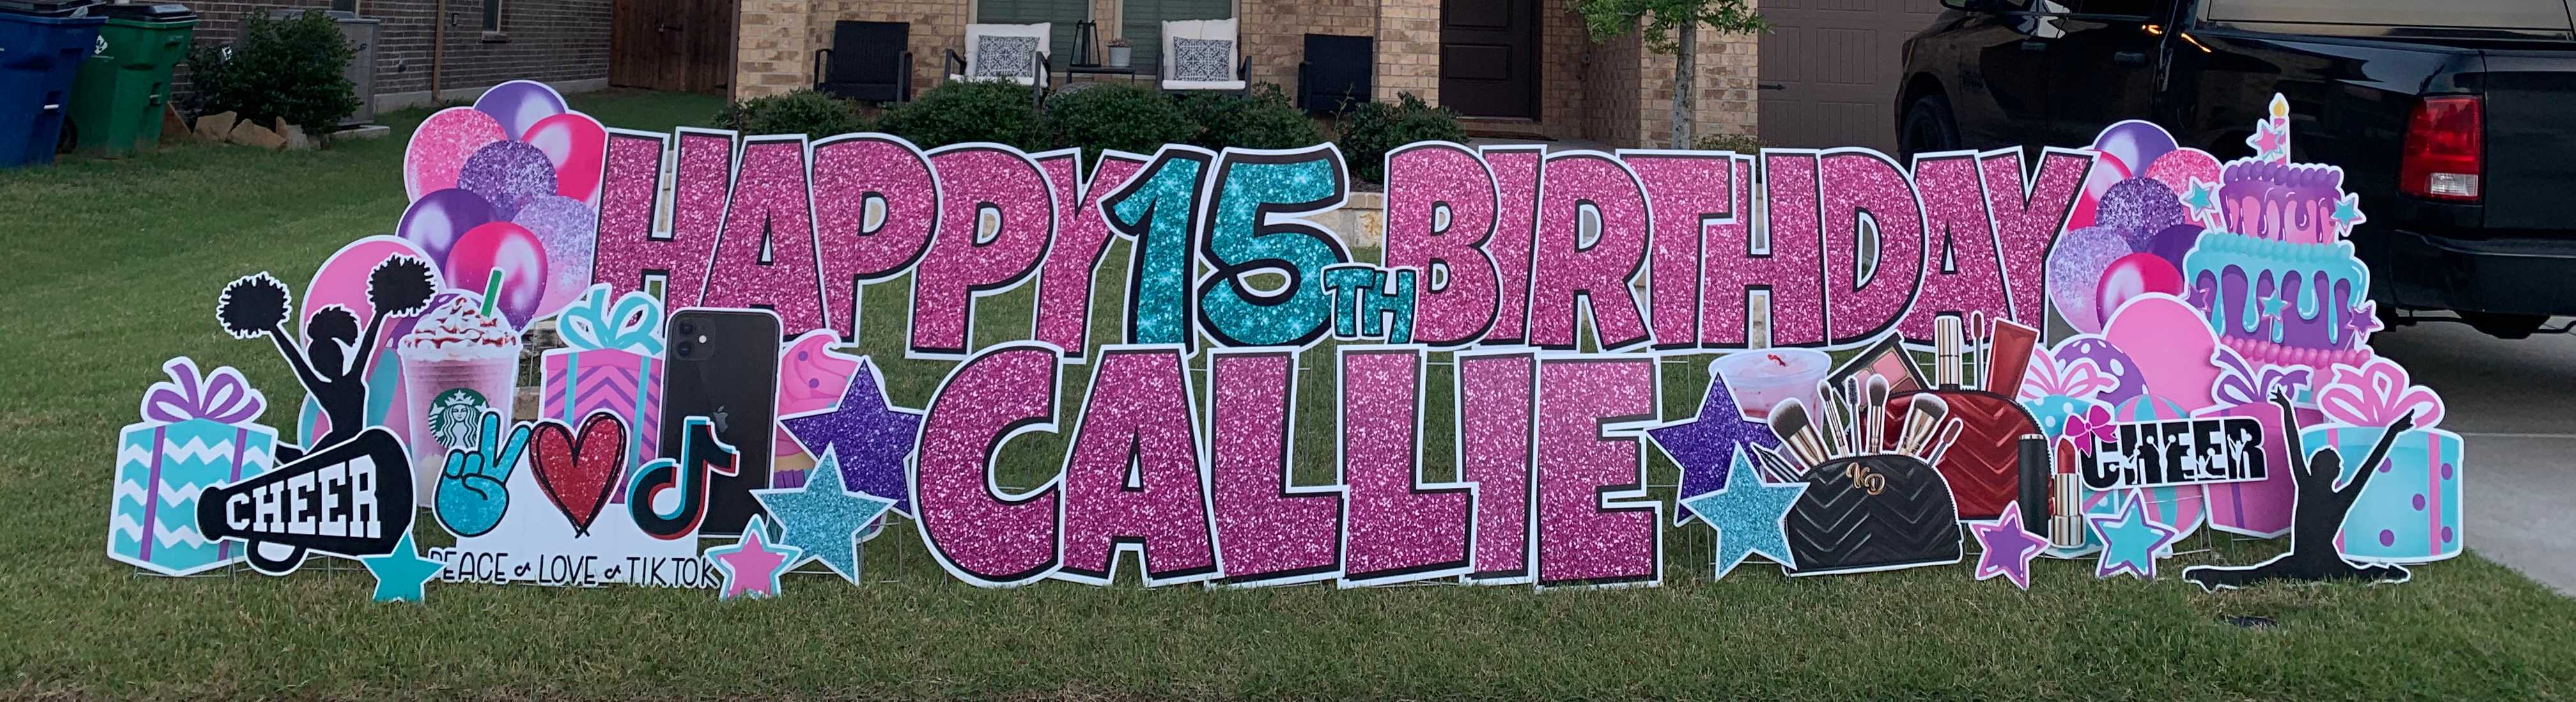 Yard card sign happy birthday callie 